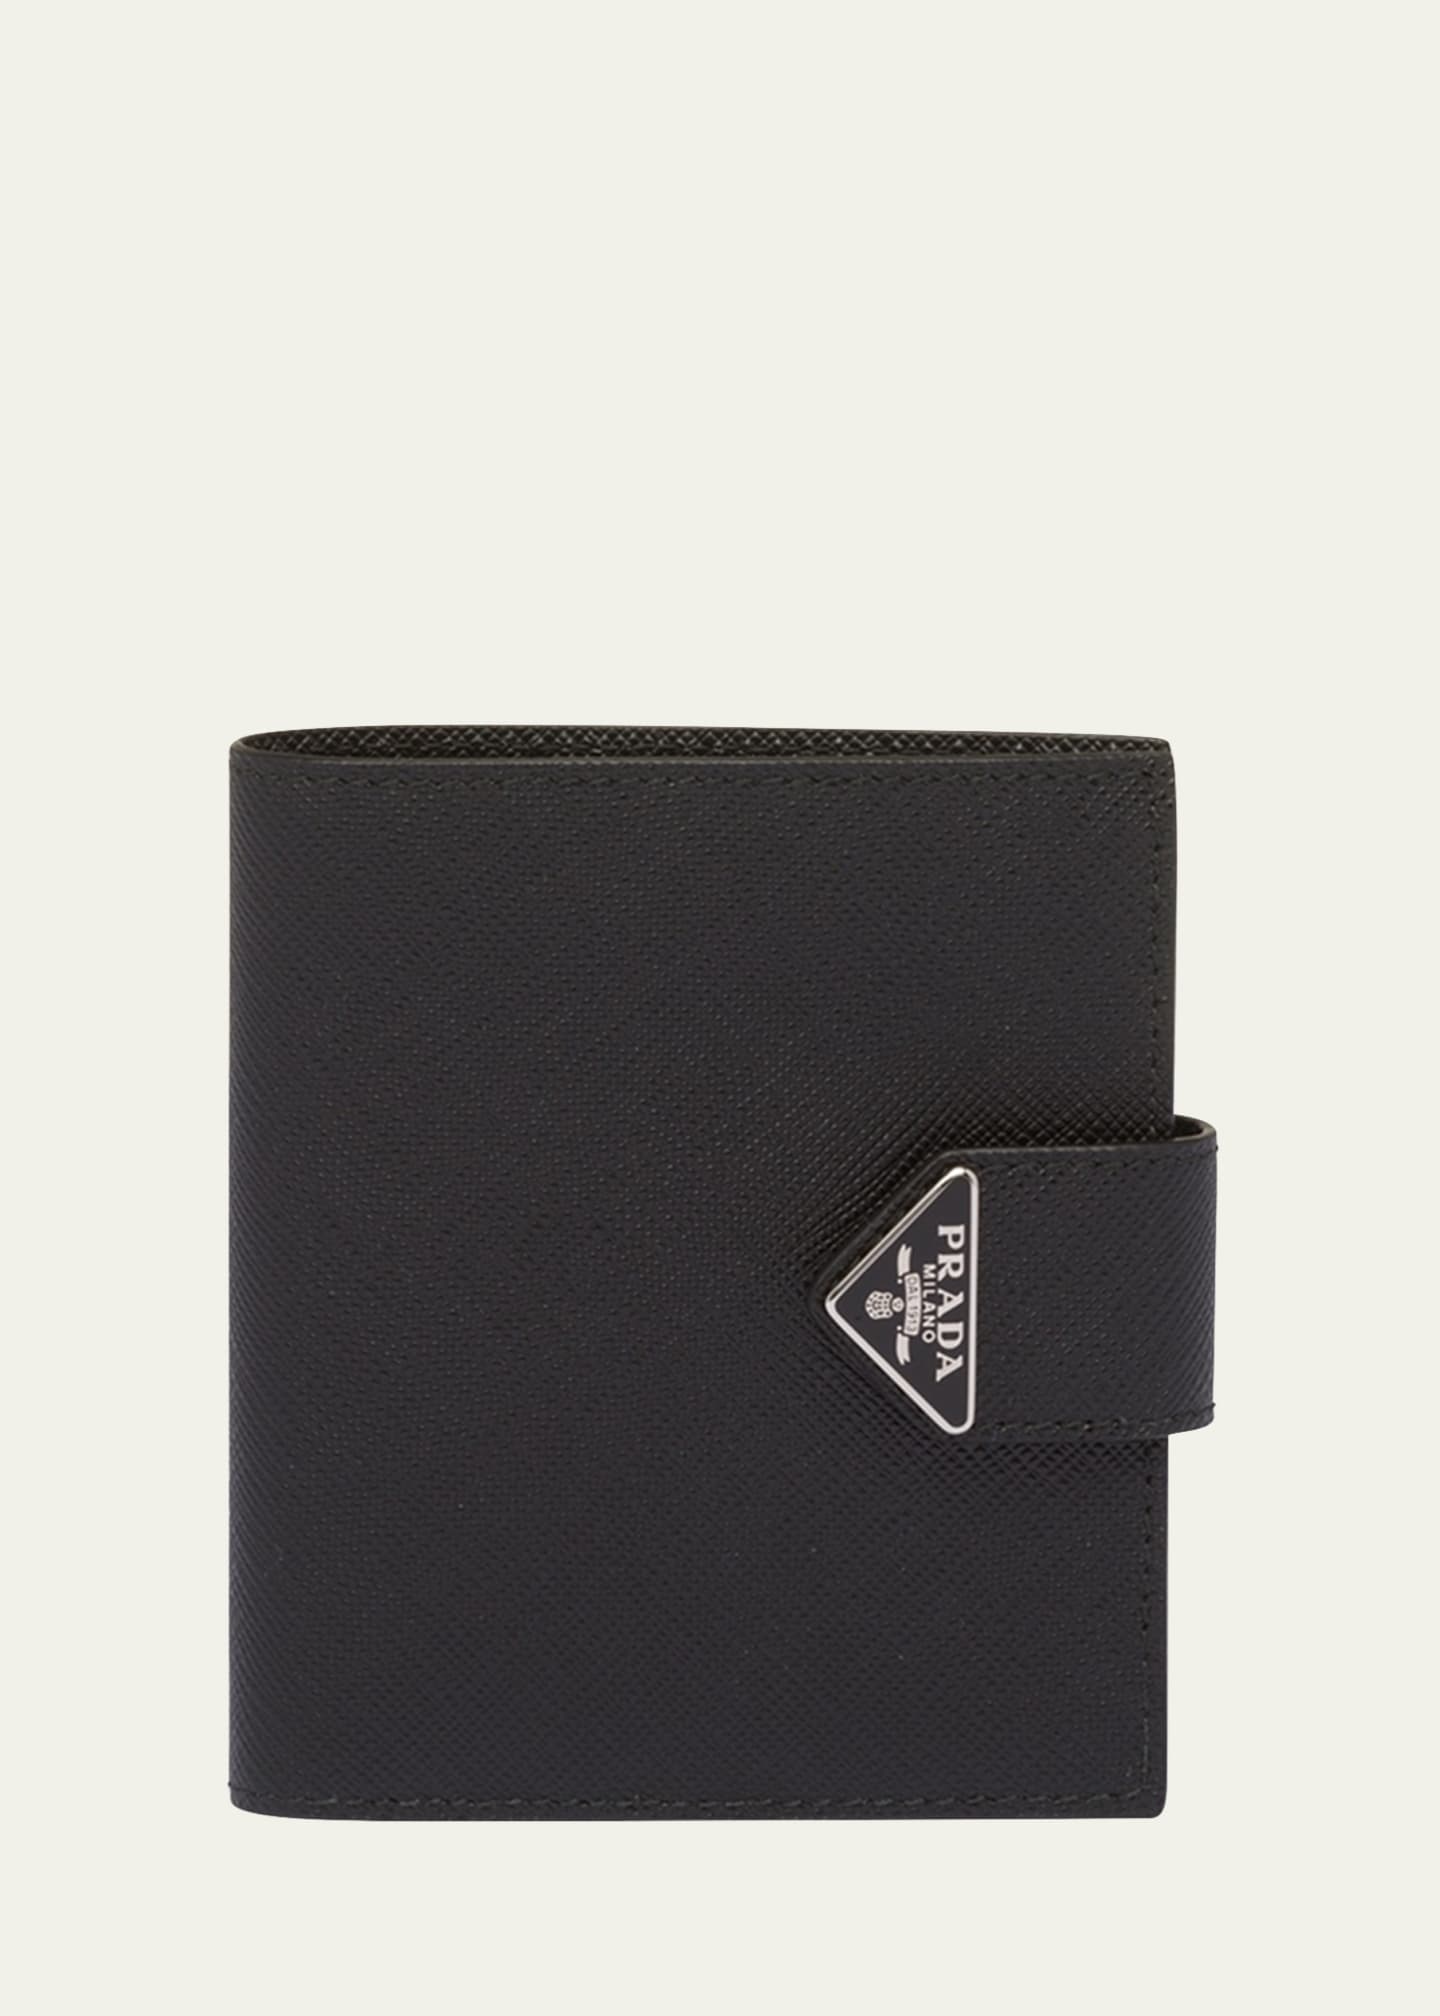 Prada Saffiano Leather Snap Bifold Wallet in Black for Men